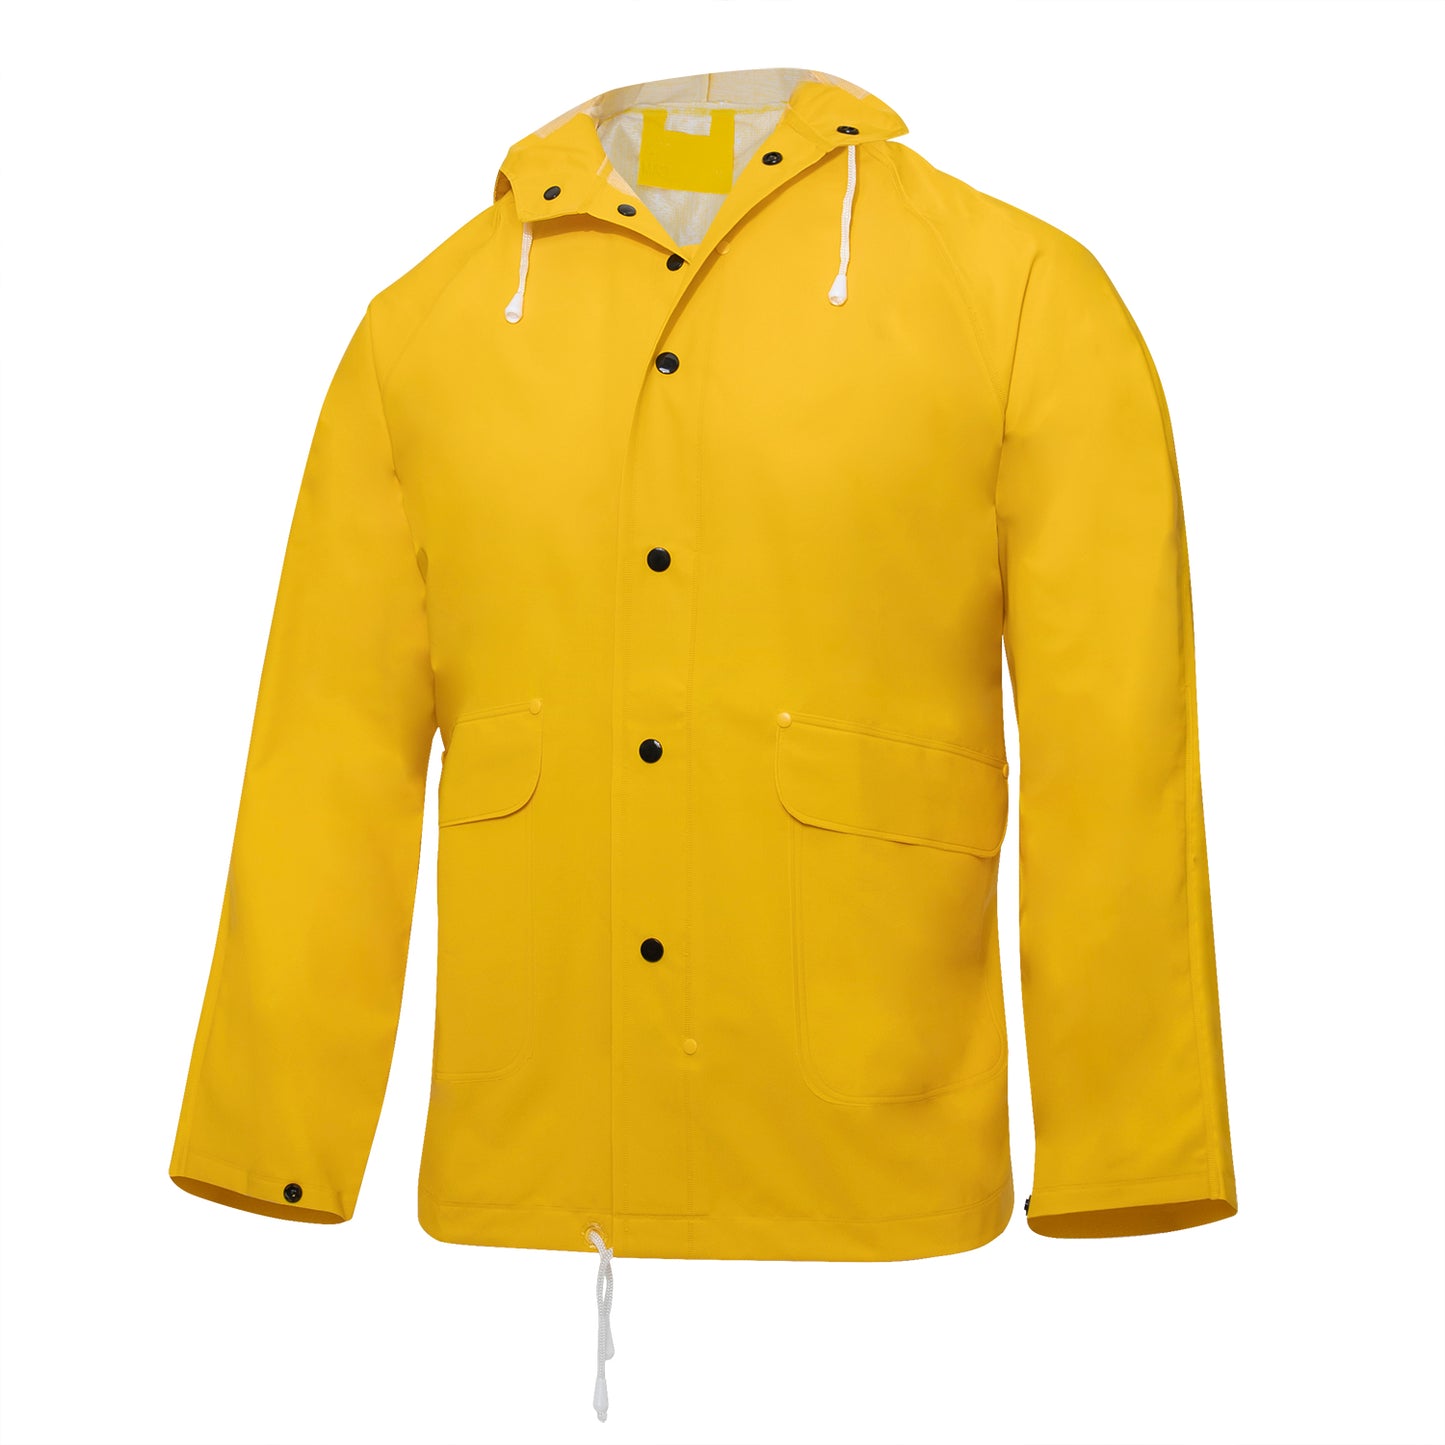 Rothco Yellow Rain Jacket